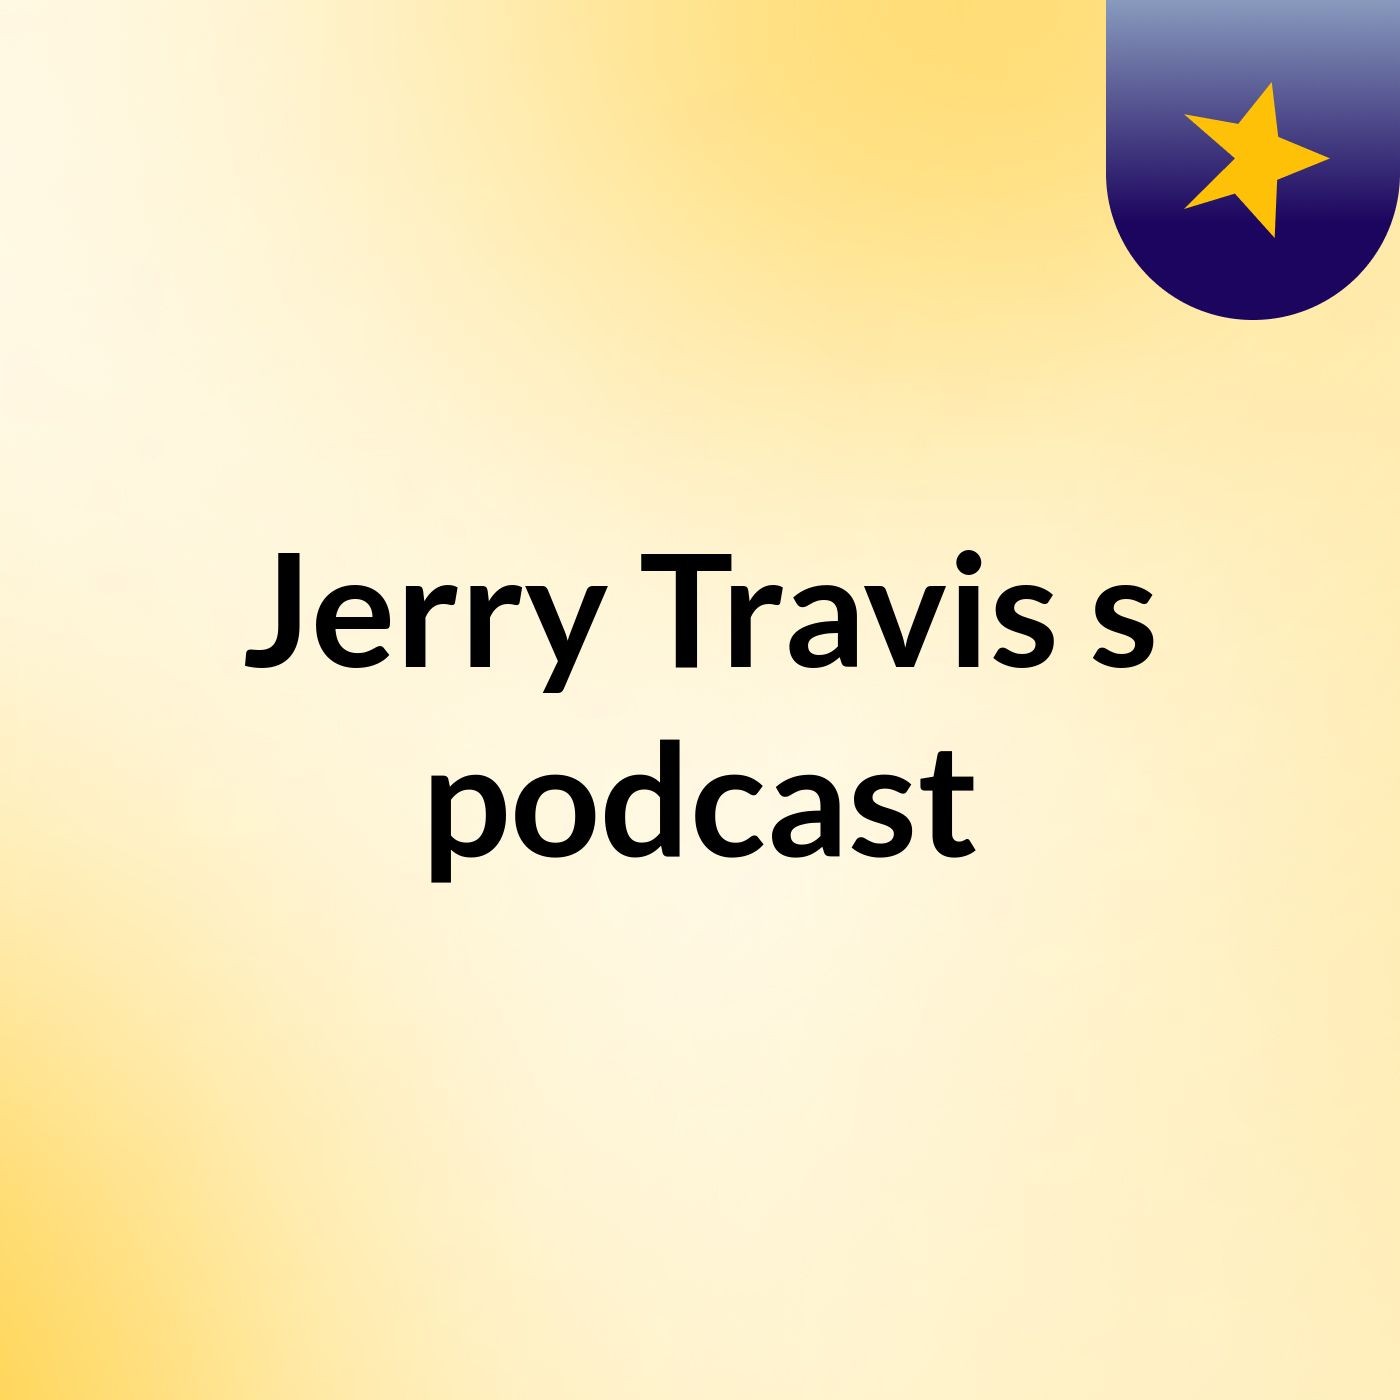 Jerry Travis's podcast